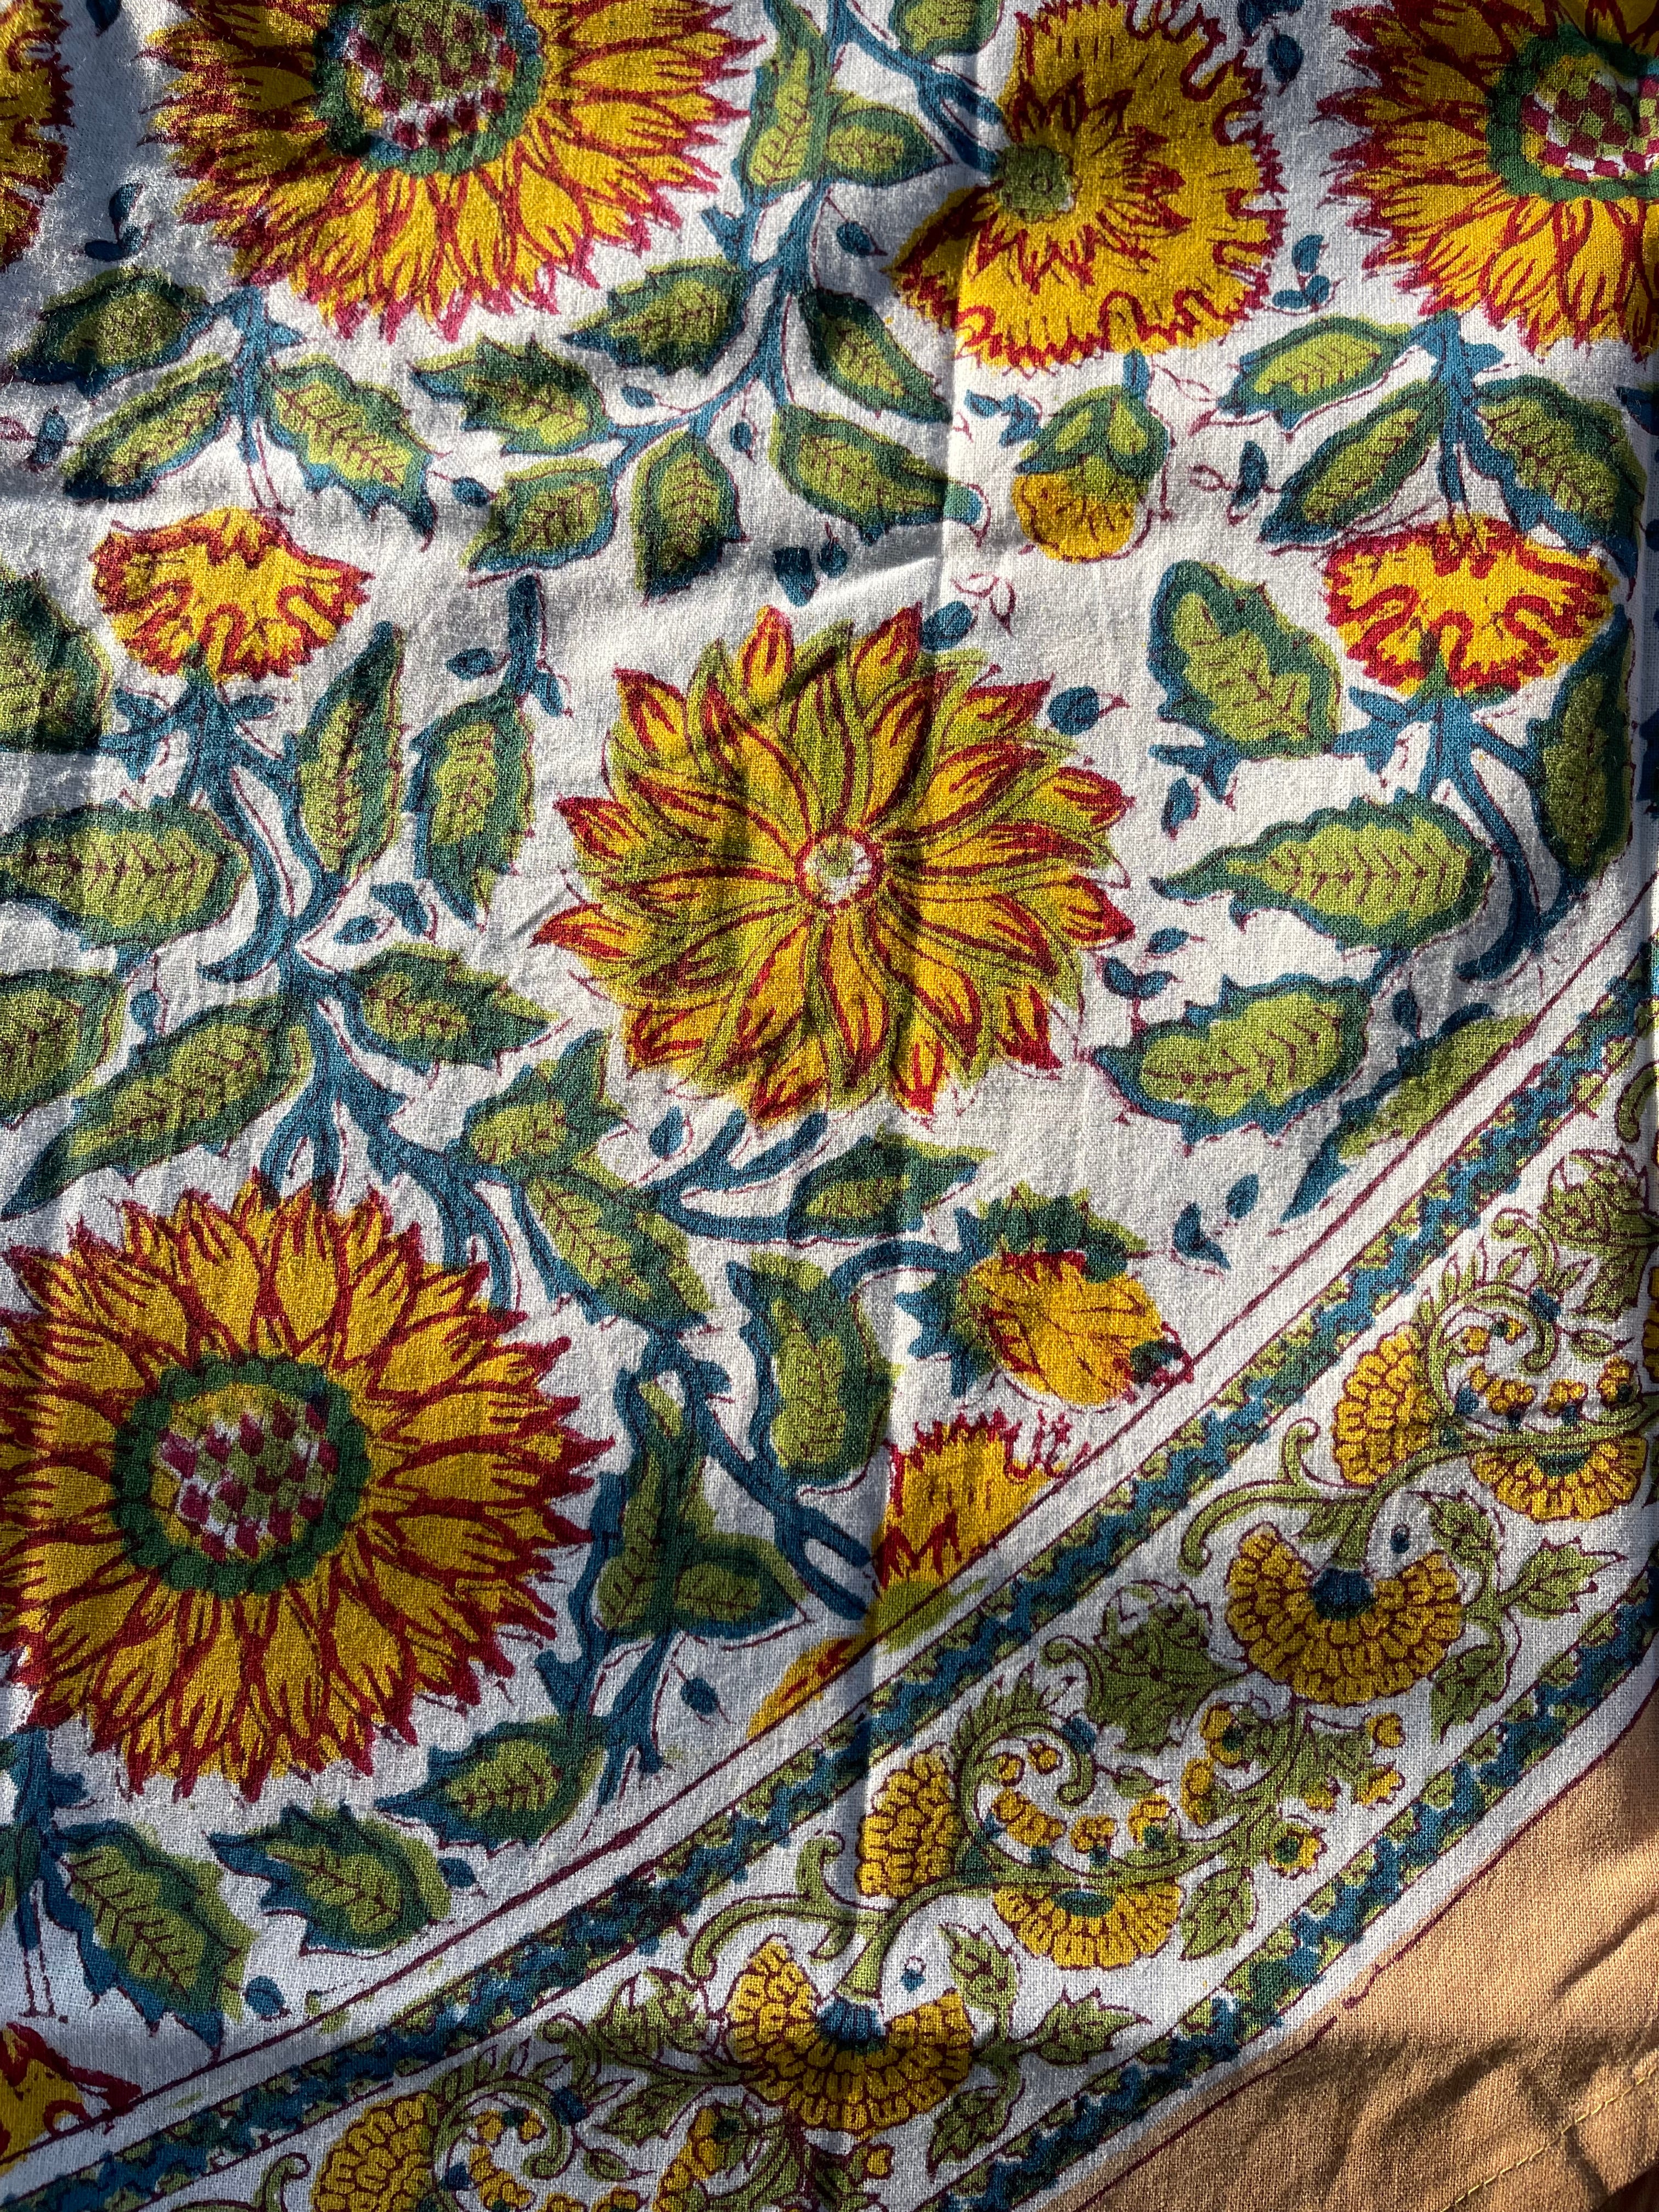 Handblock Printed Tablecloth Round - Sunflower